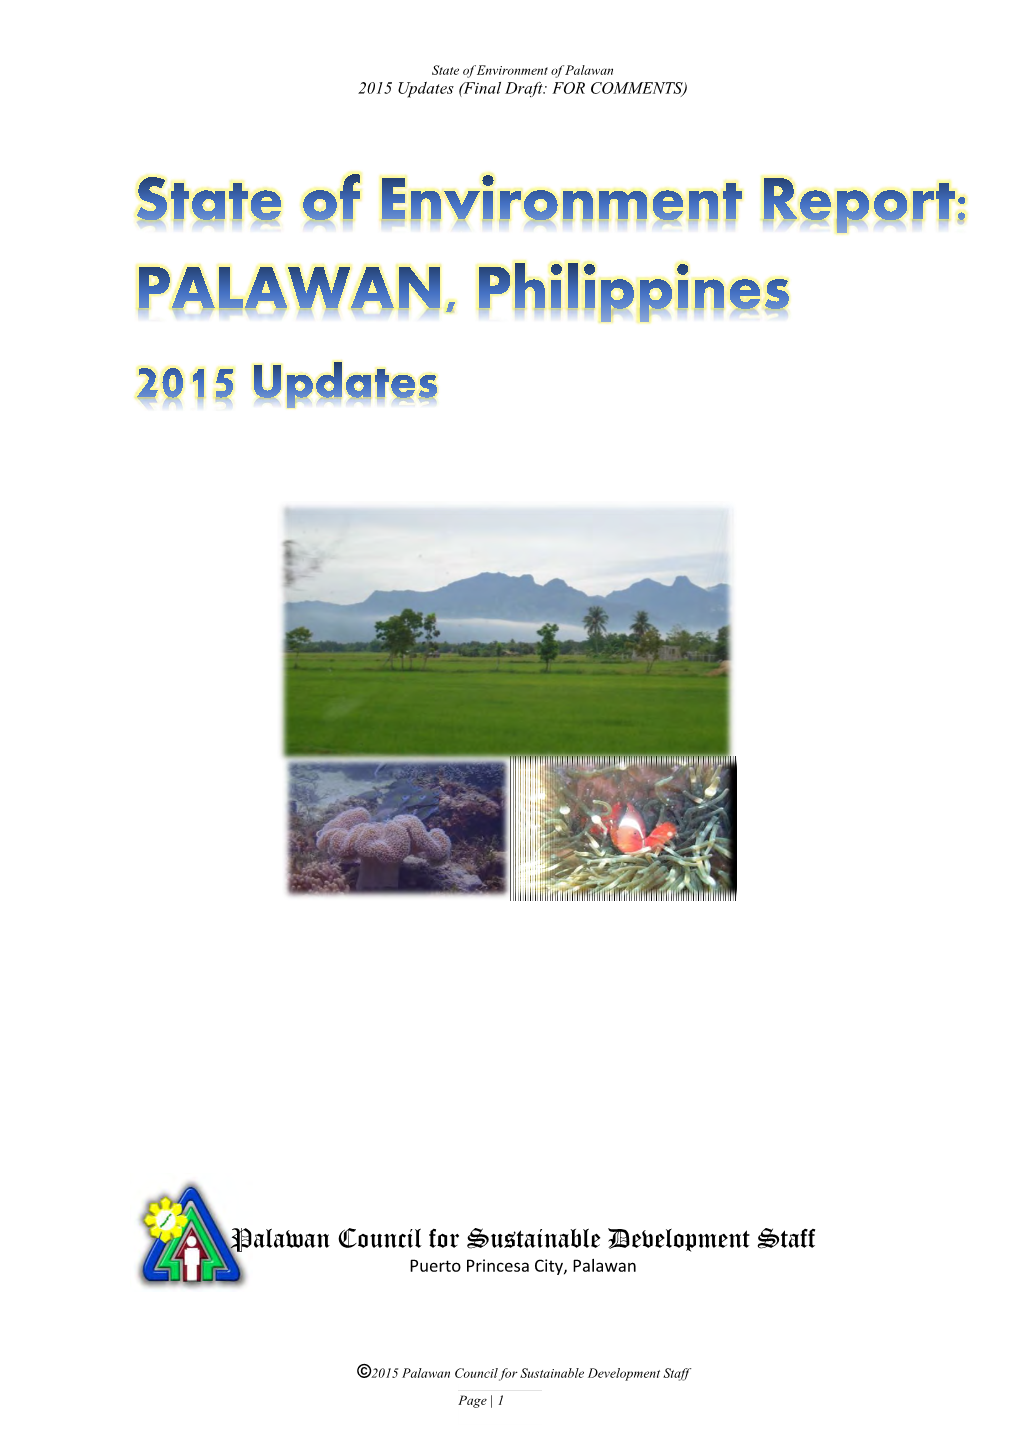 Palawan Council for Sustainable Development Staff Puerto Princesa City, Palawan